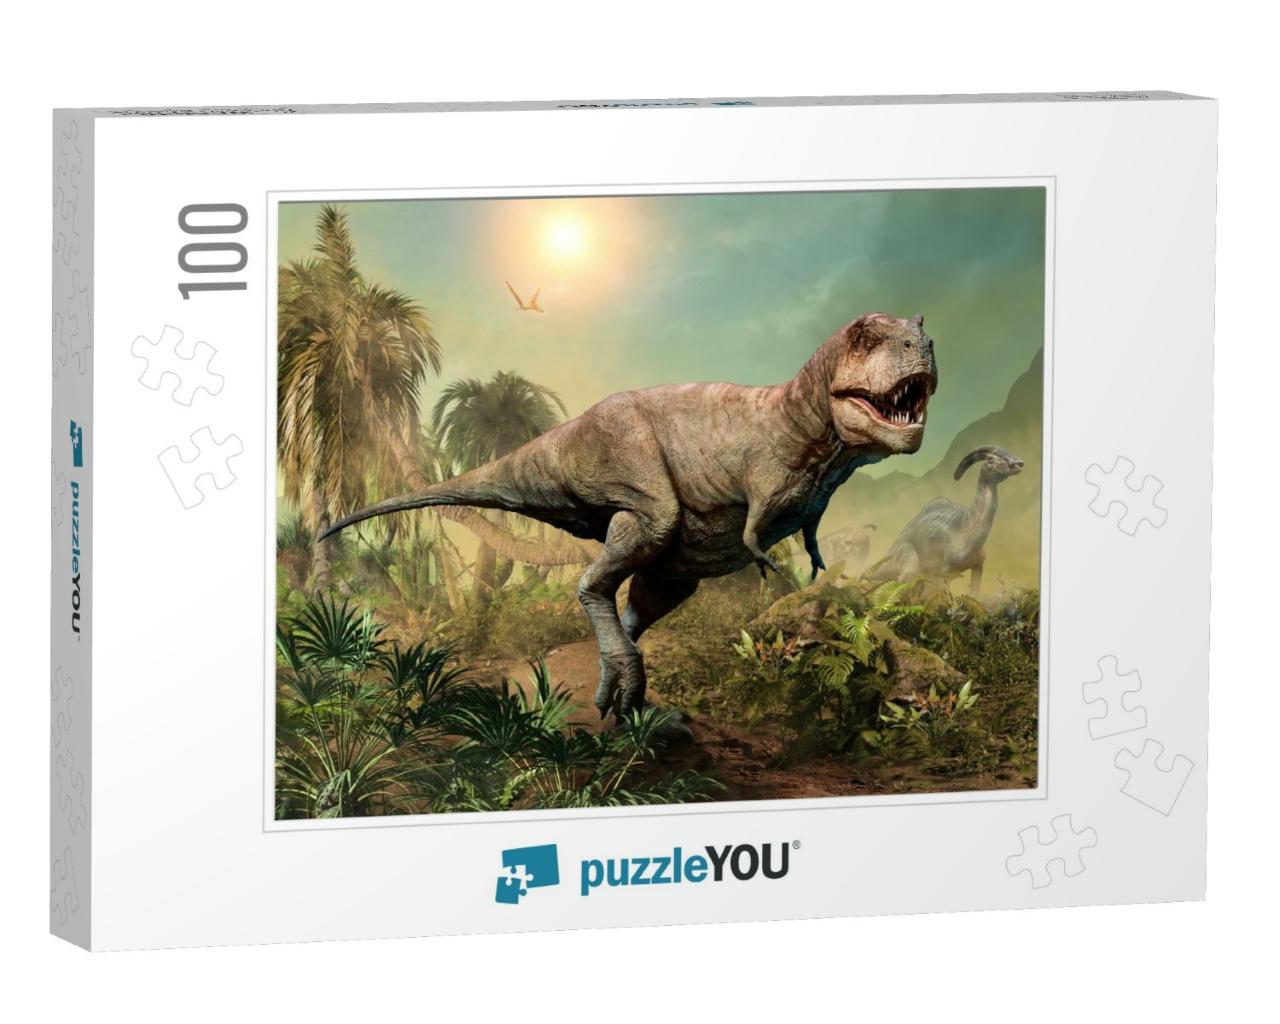 Tyrannosaurus Rex Scene 3D Illustration... Jigsaw Puzzle with 100 pieces